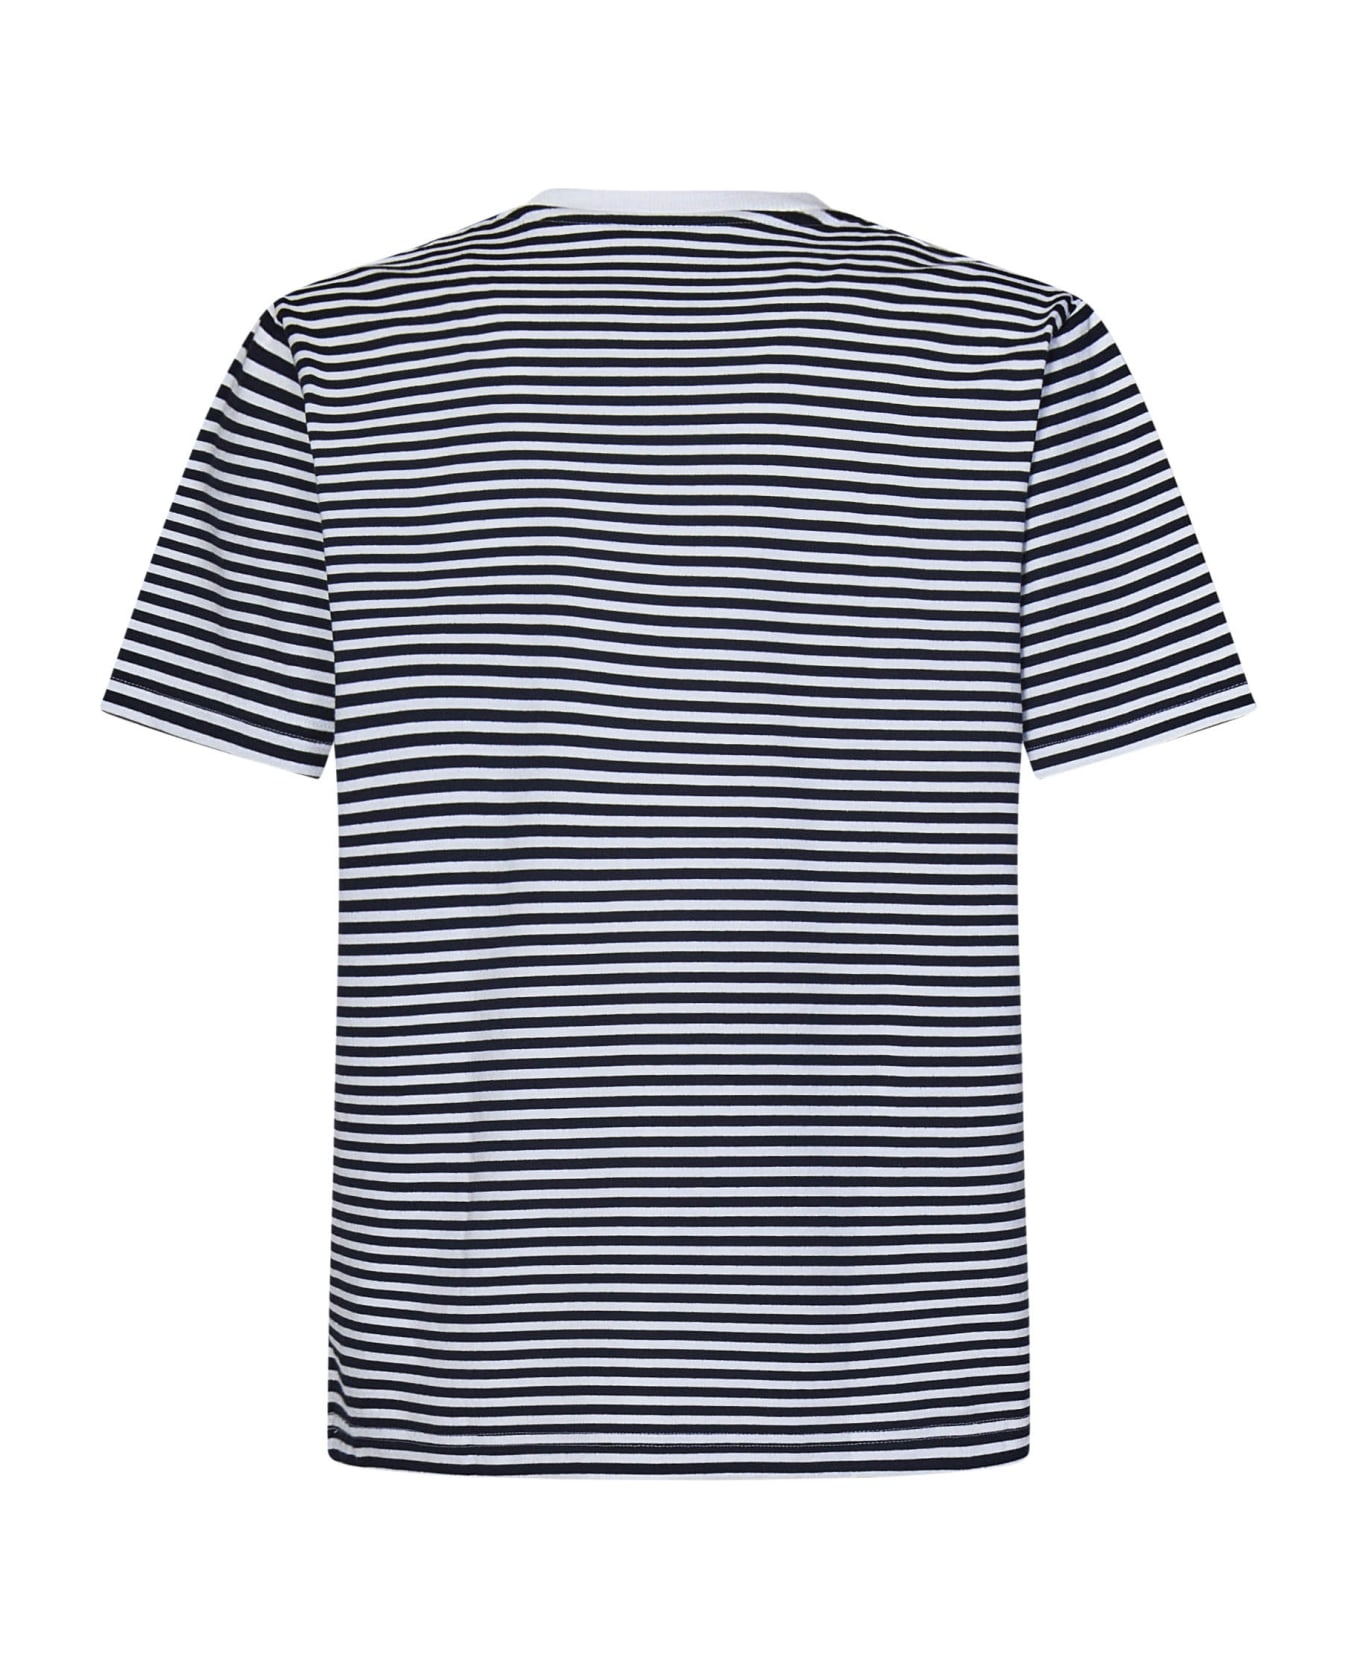 Lacoste T-shirt - White/blue